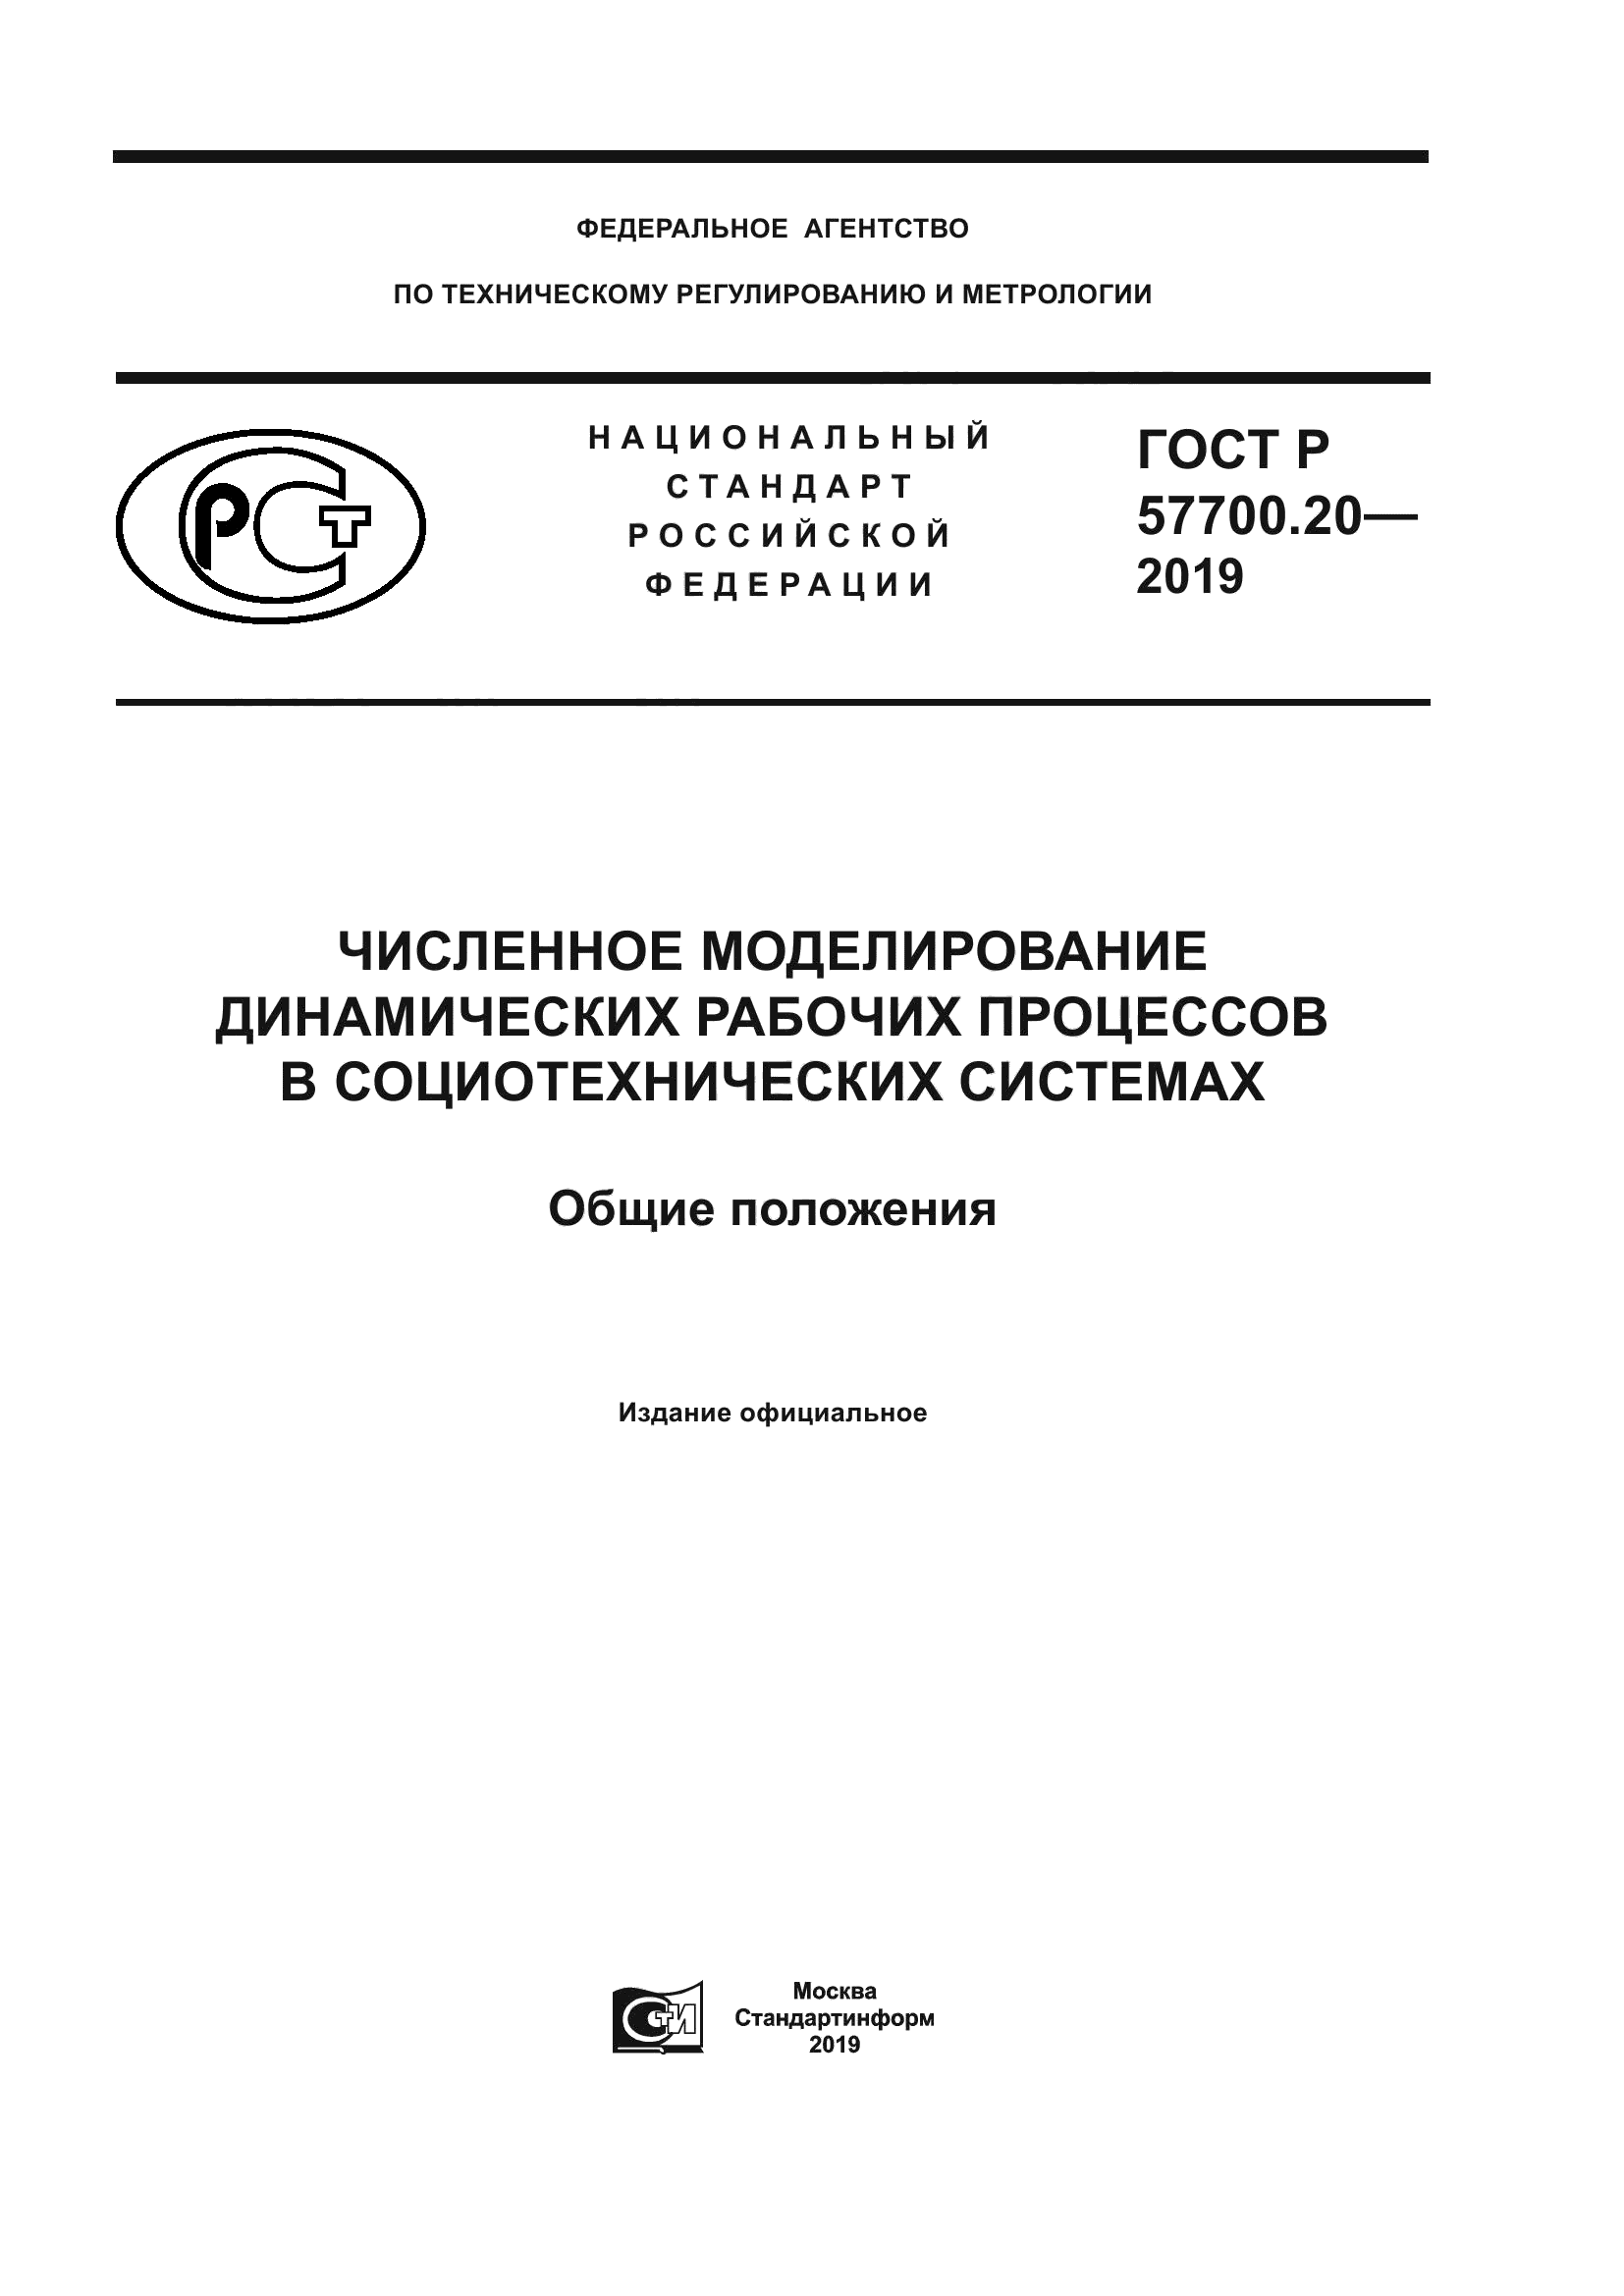 ГОСТ Р 57700.20-2019